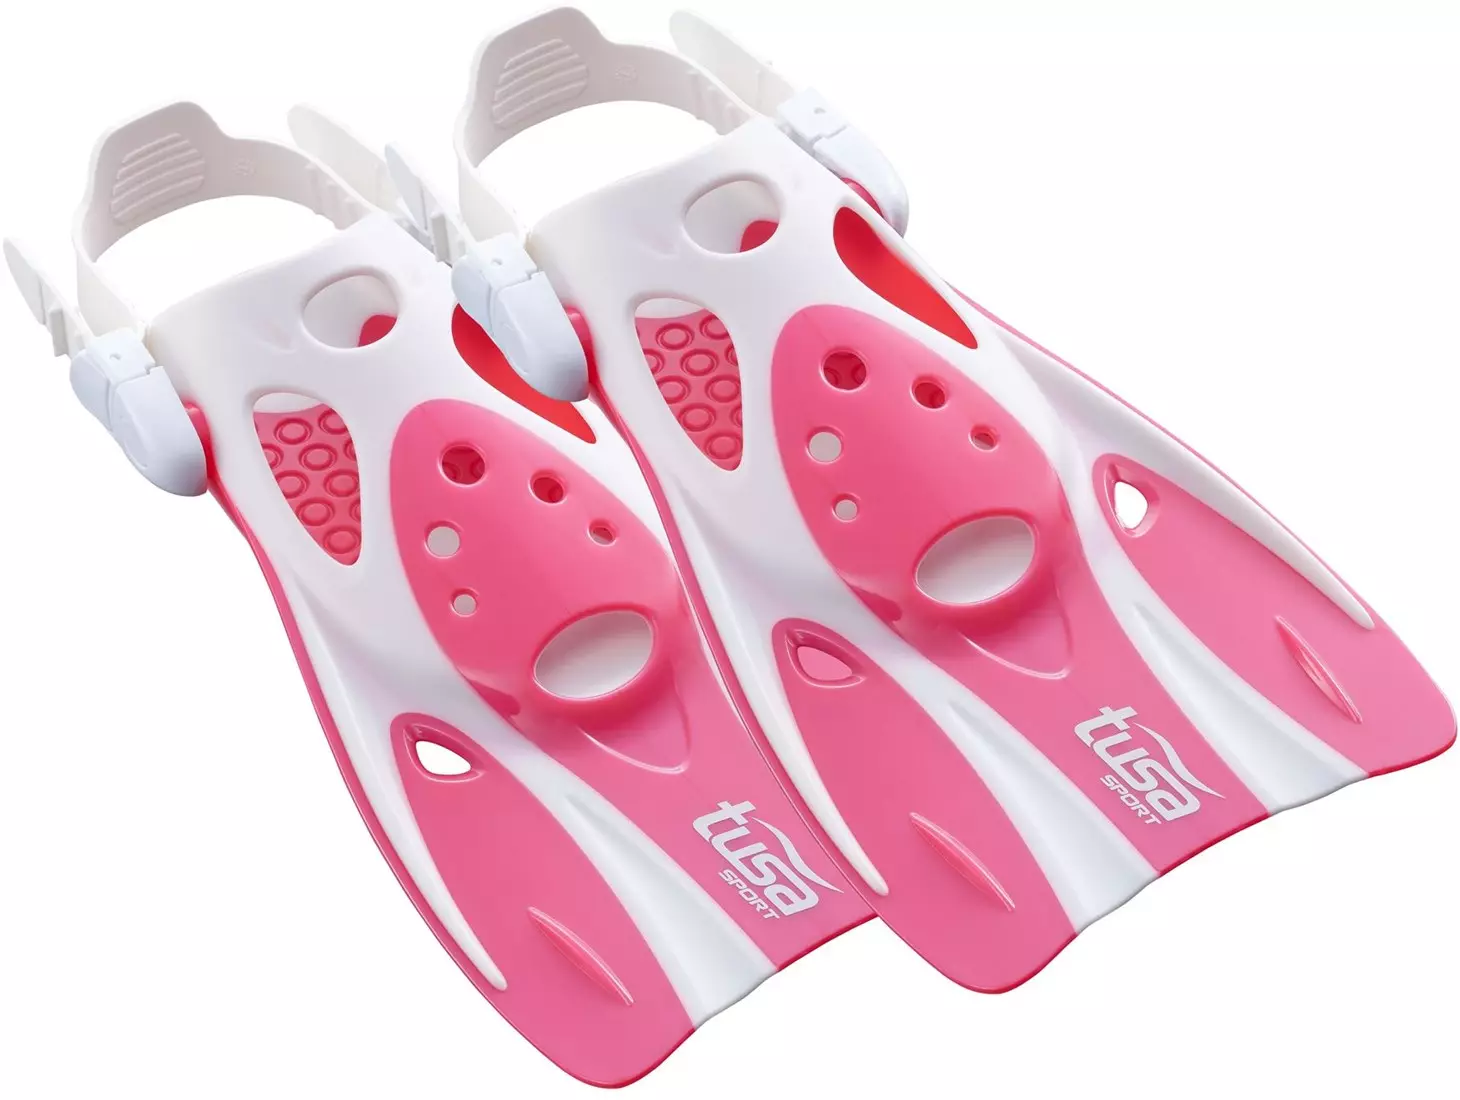 Flippers kanak-kanak untuk kolam renang: Pilih getah dan silikon yang dipendekkan untuk berenang dan latihan 8828_9